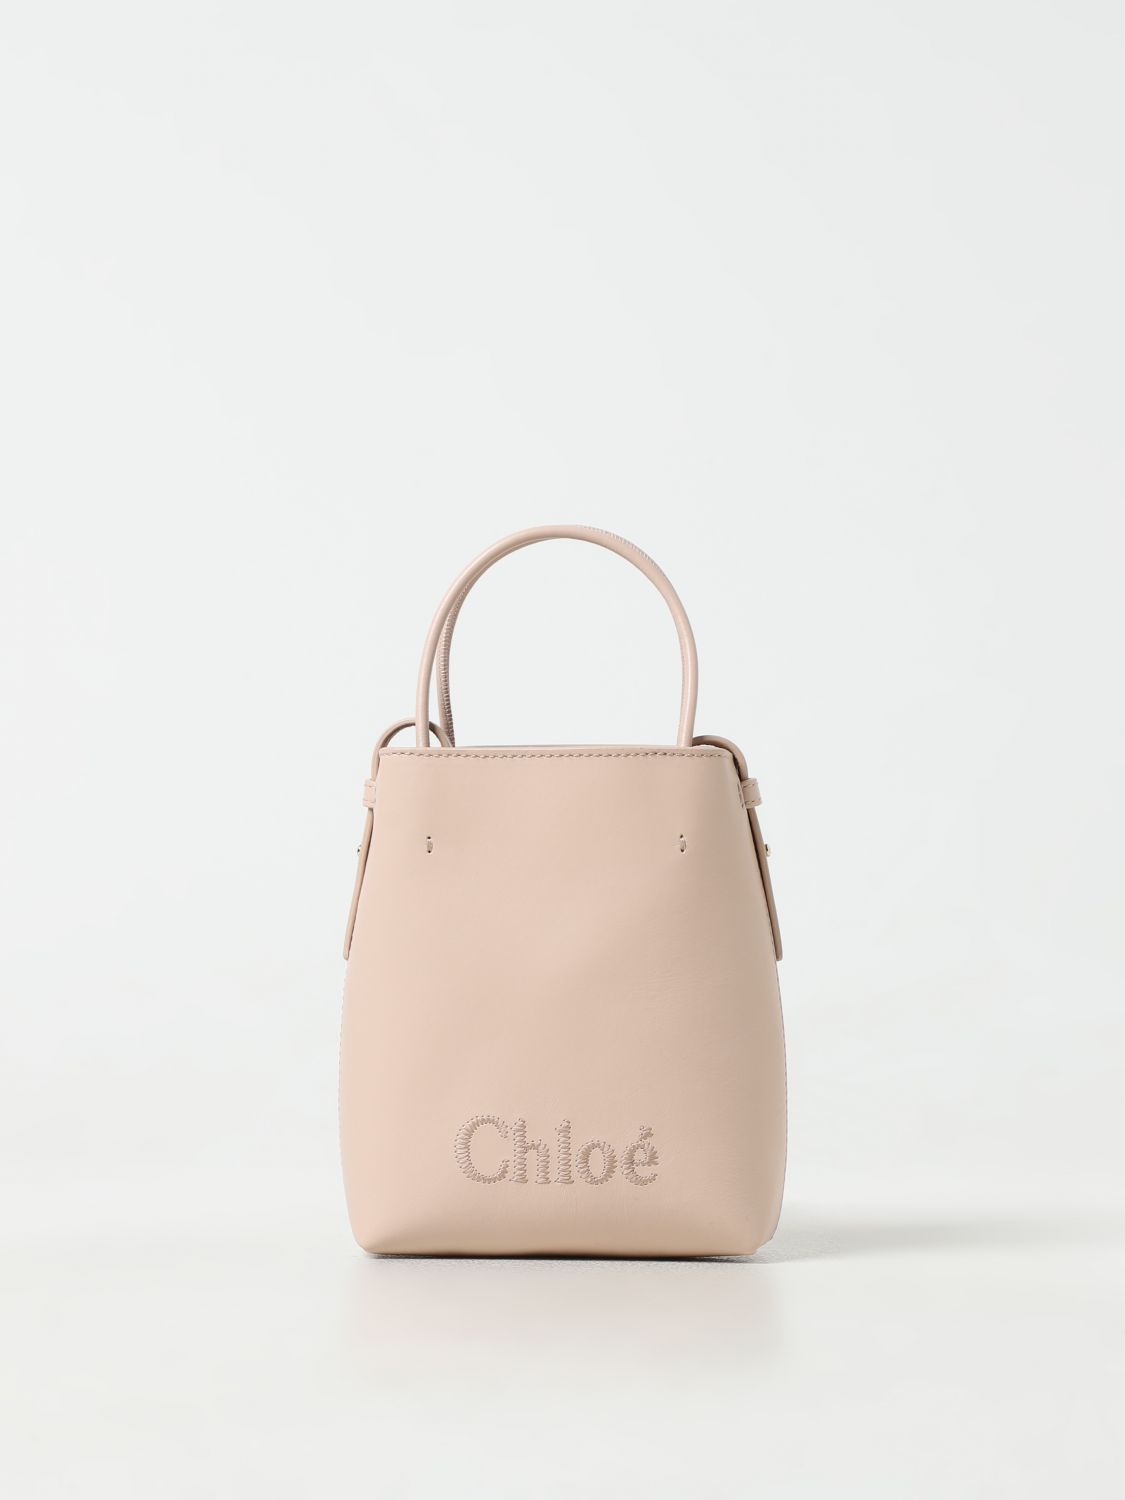 Chloé Mini Bag  Woman Color Pink